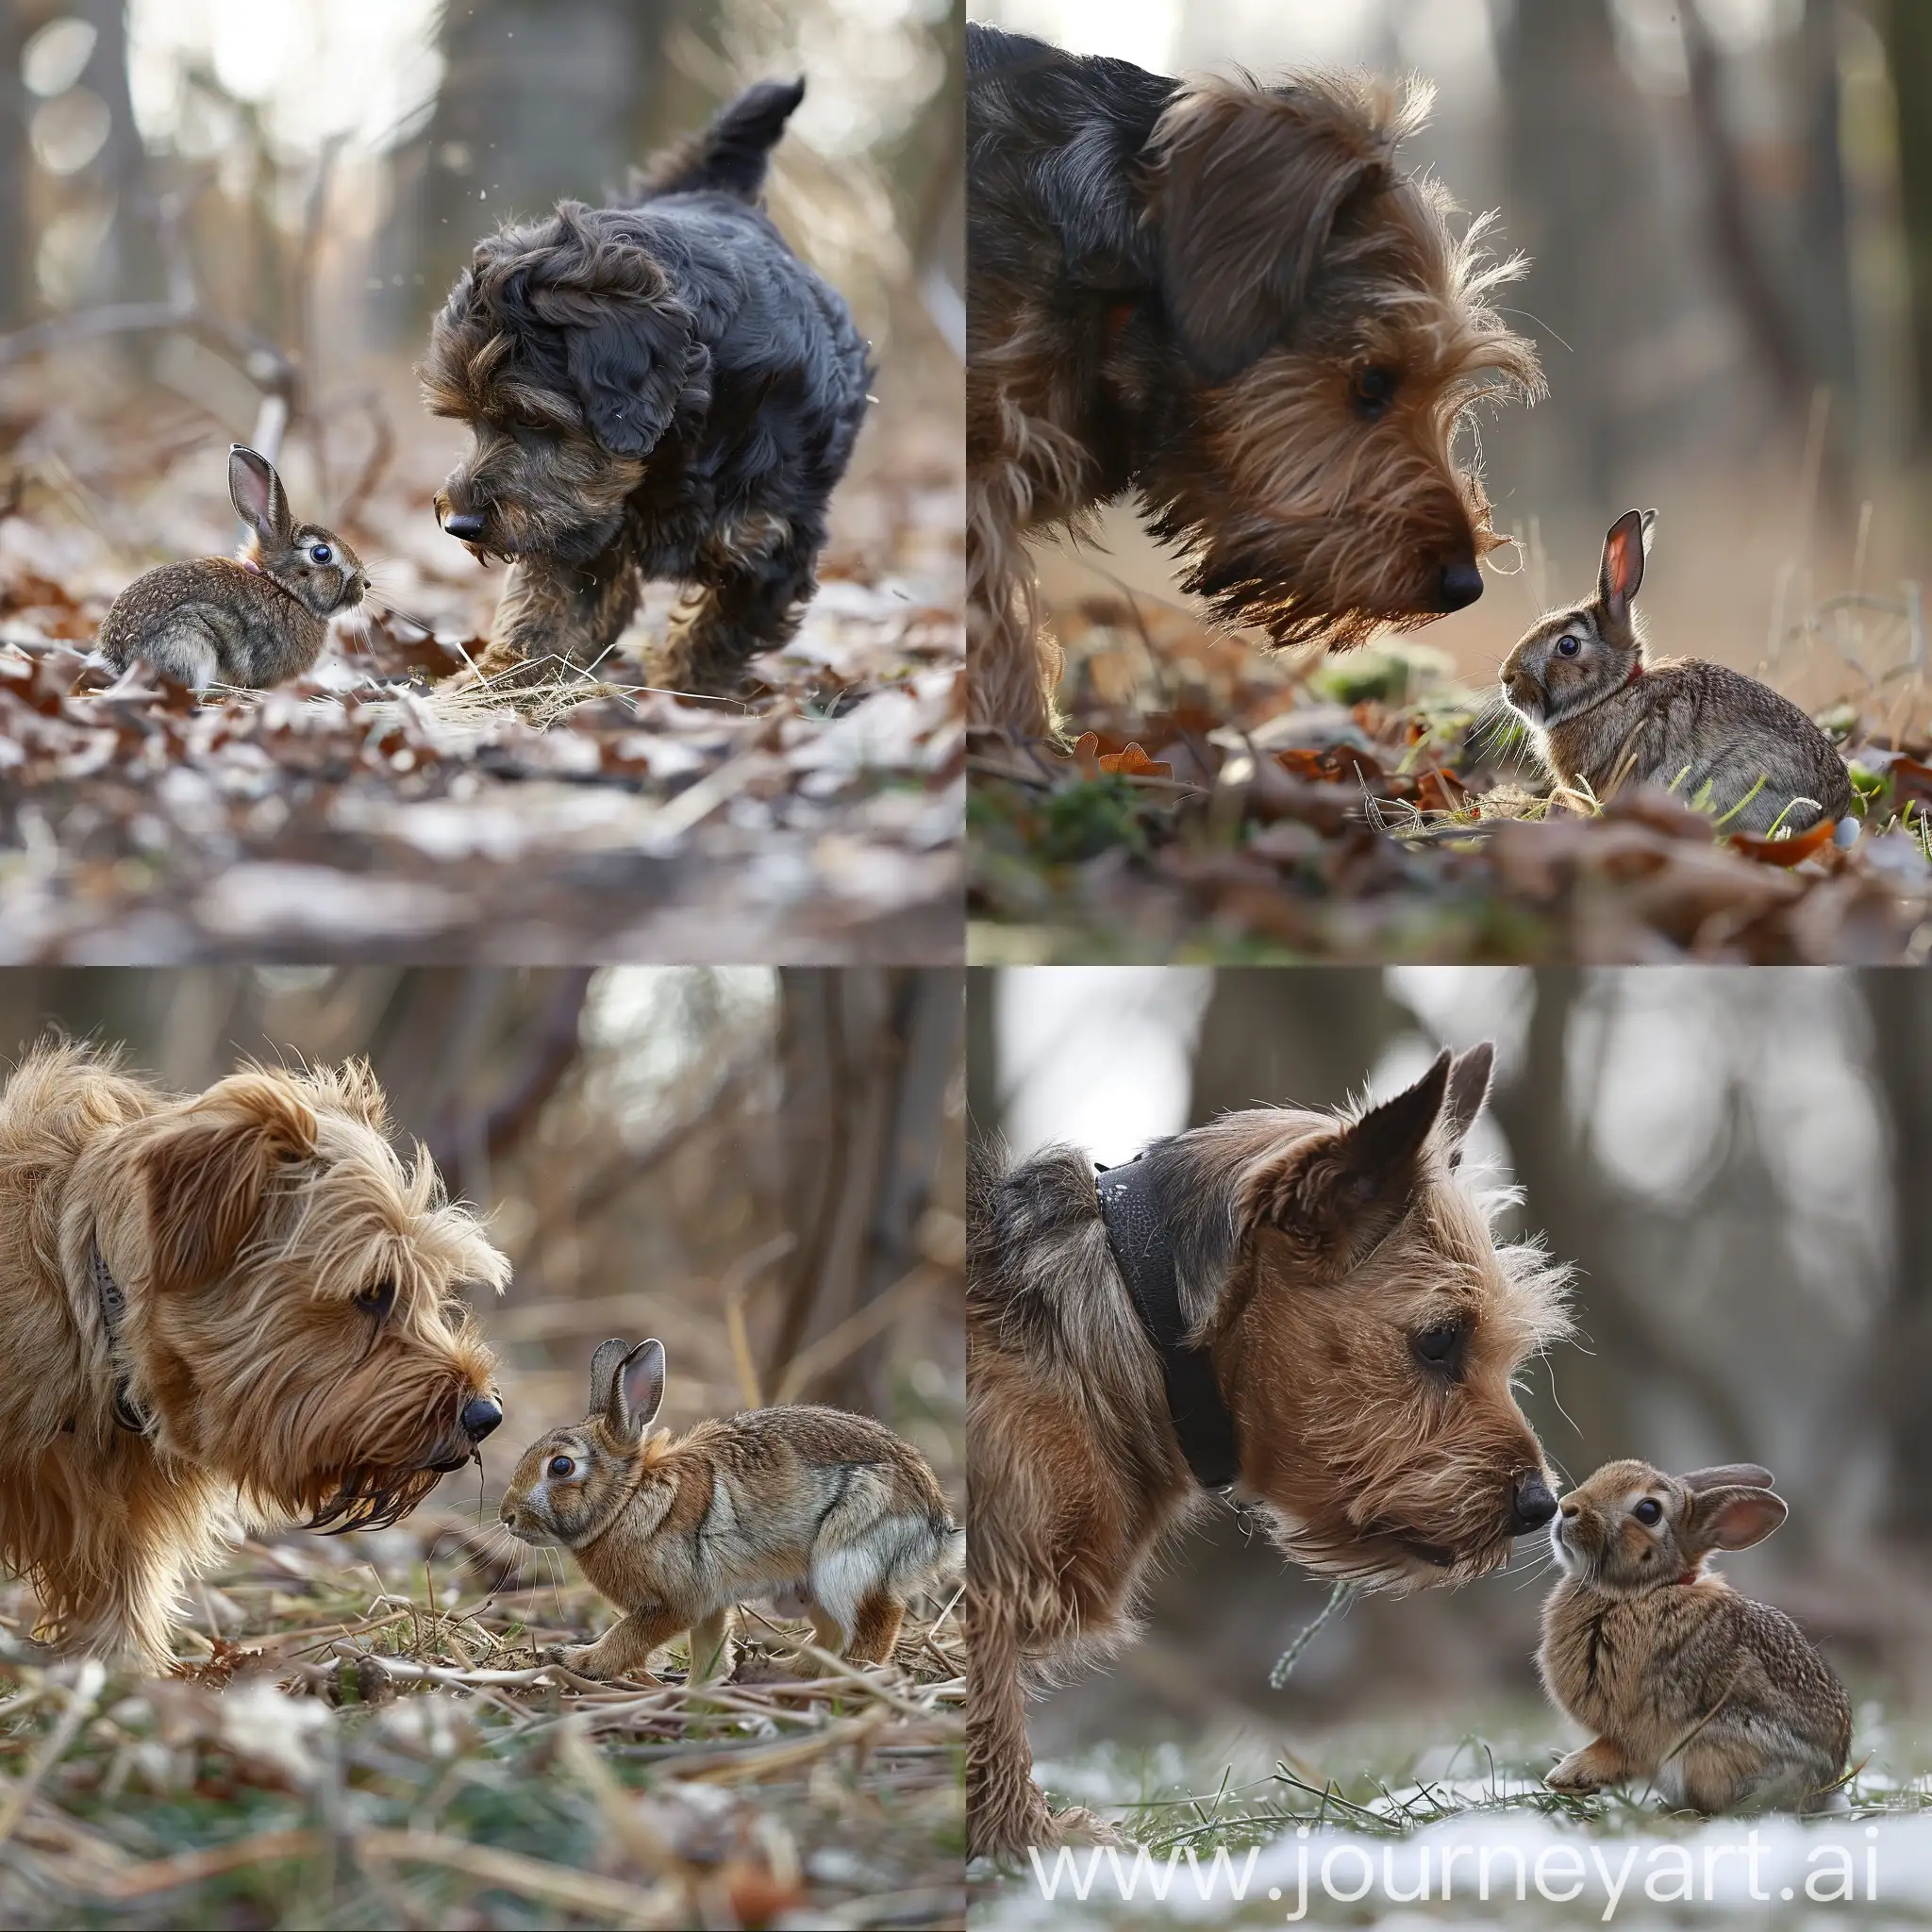 Griffon-Korthals-Dog-Hunting-Rabbit-Dynamic-Canine-Pursuit